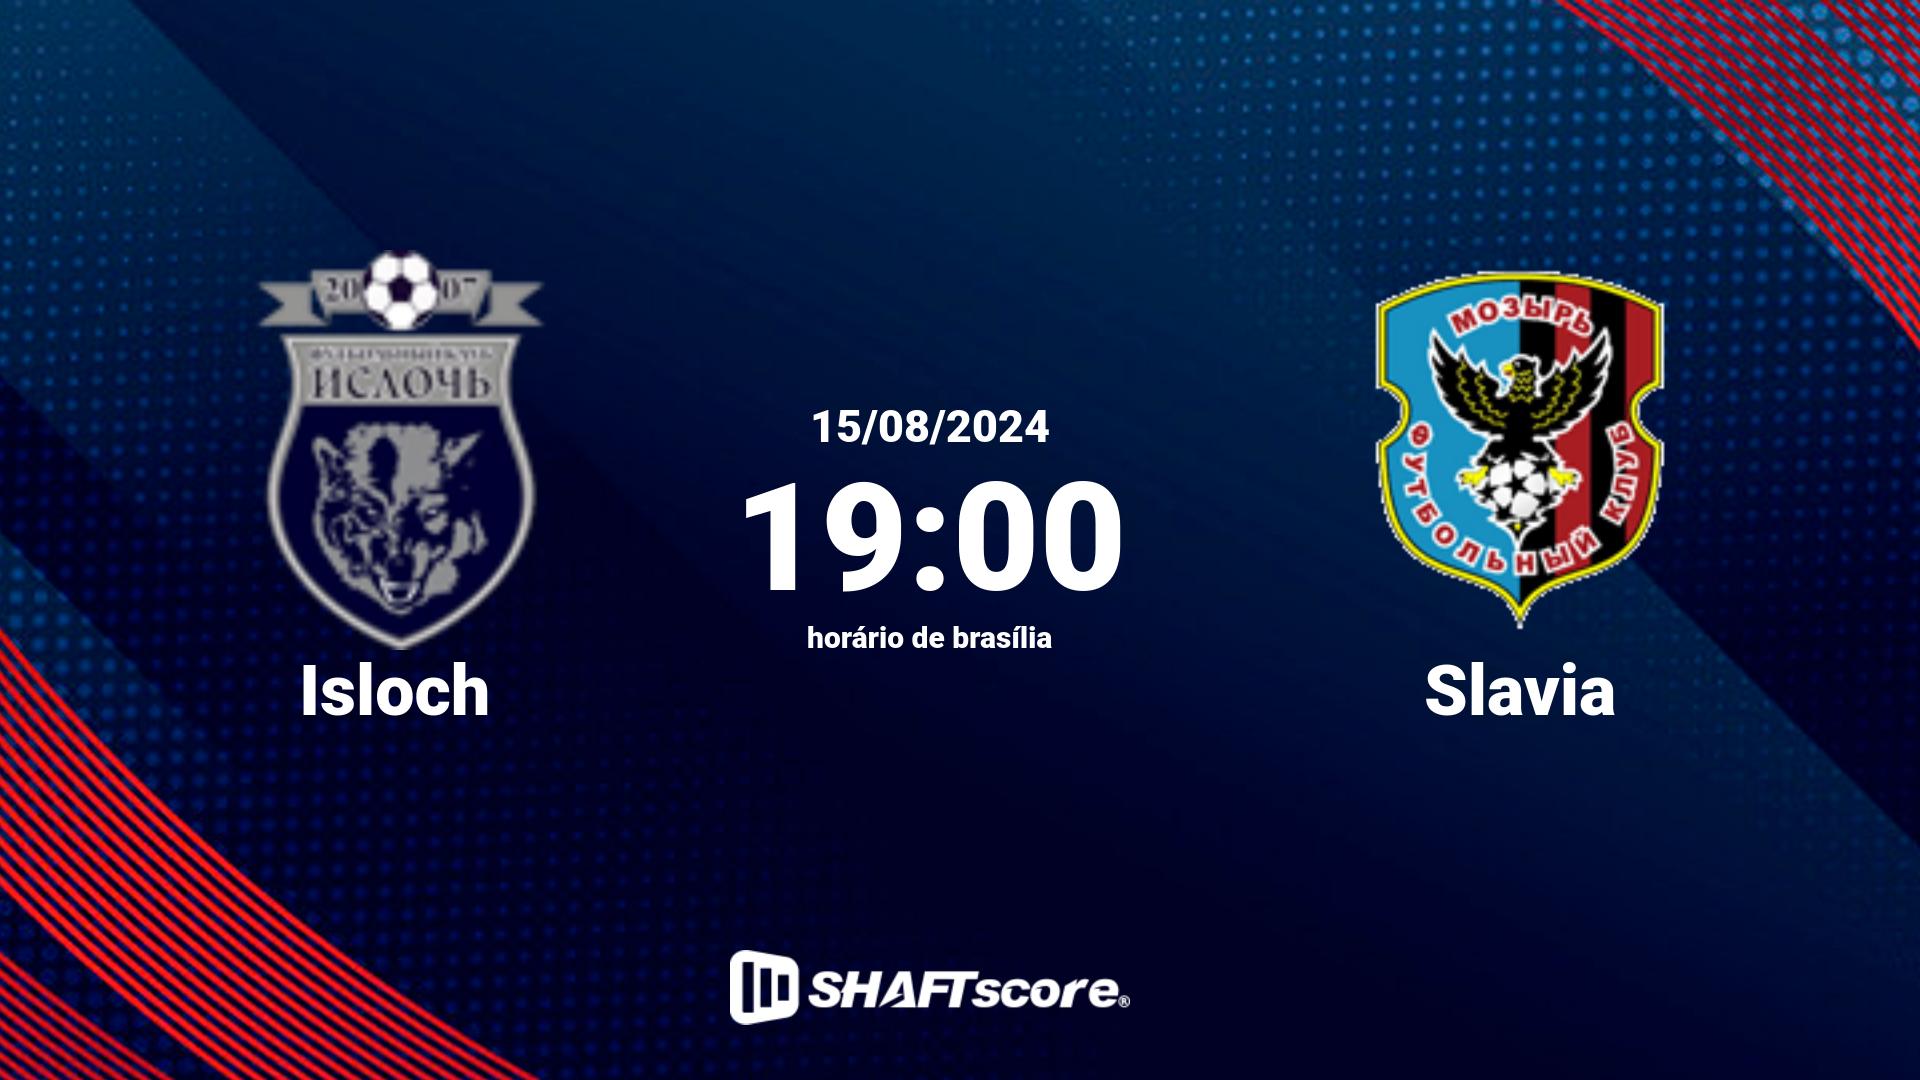 Estatísticas do jogo Isloch vs Slavia 15.08 19:00